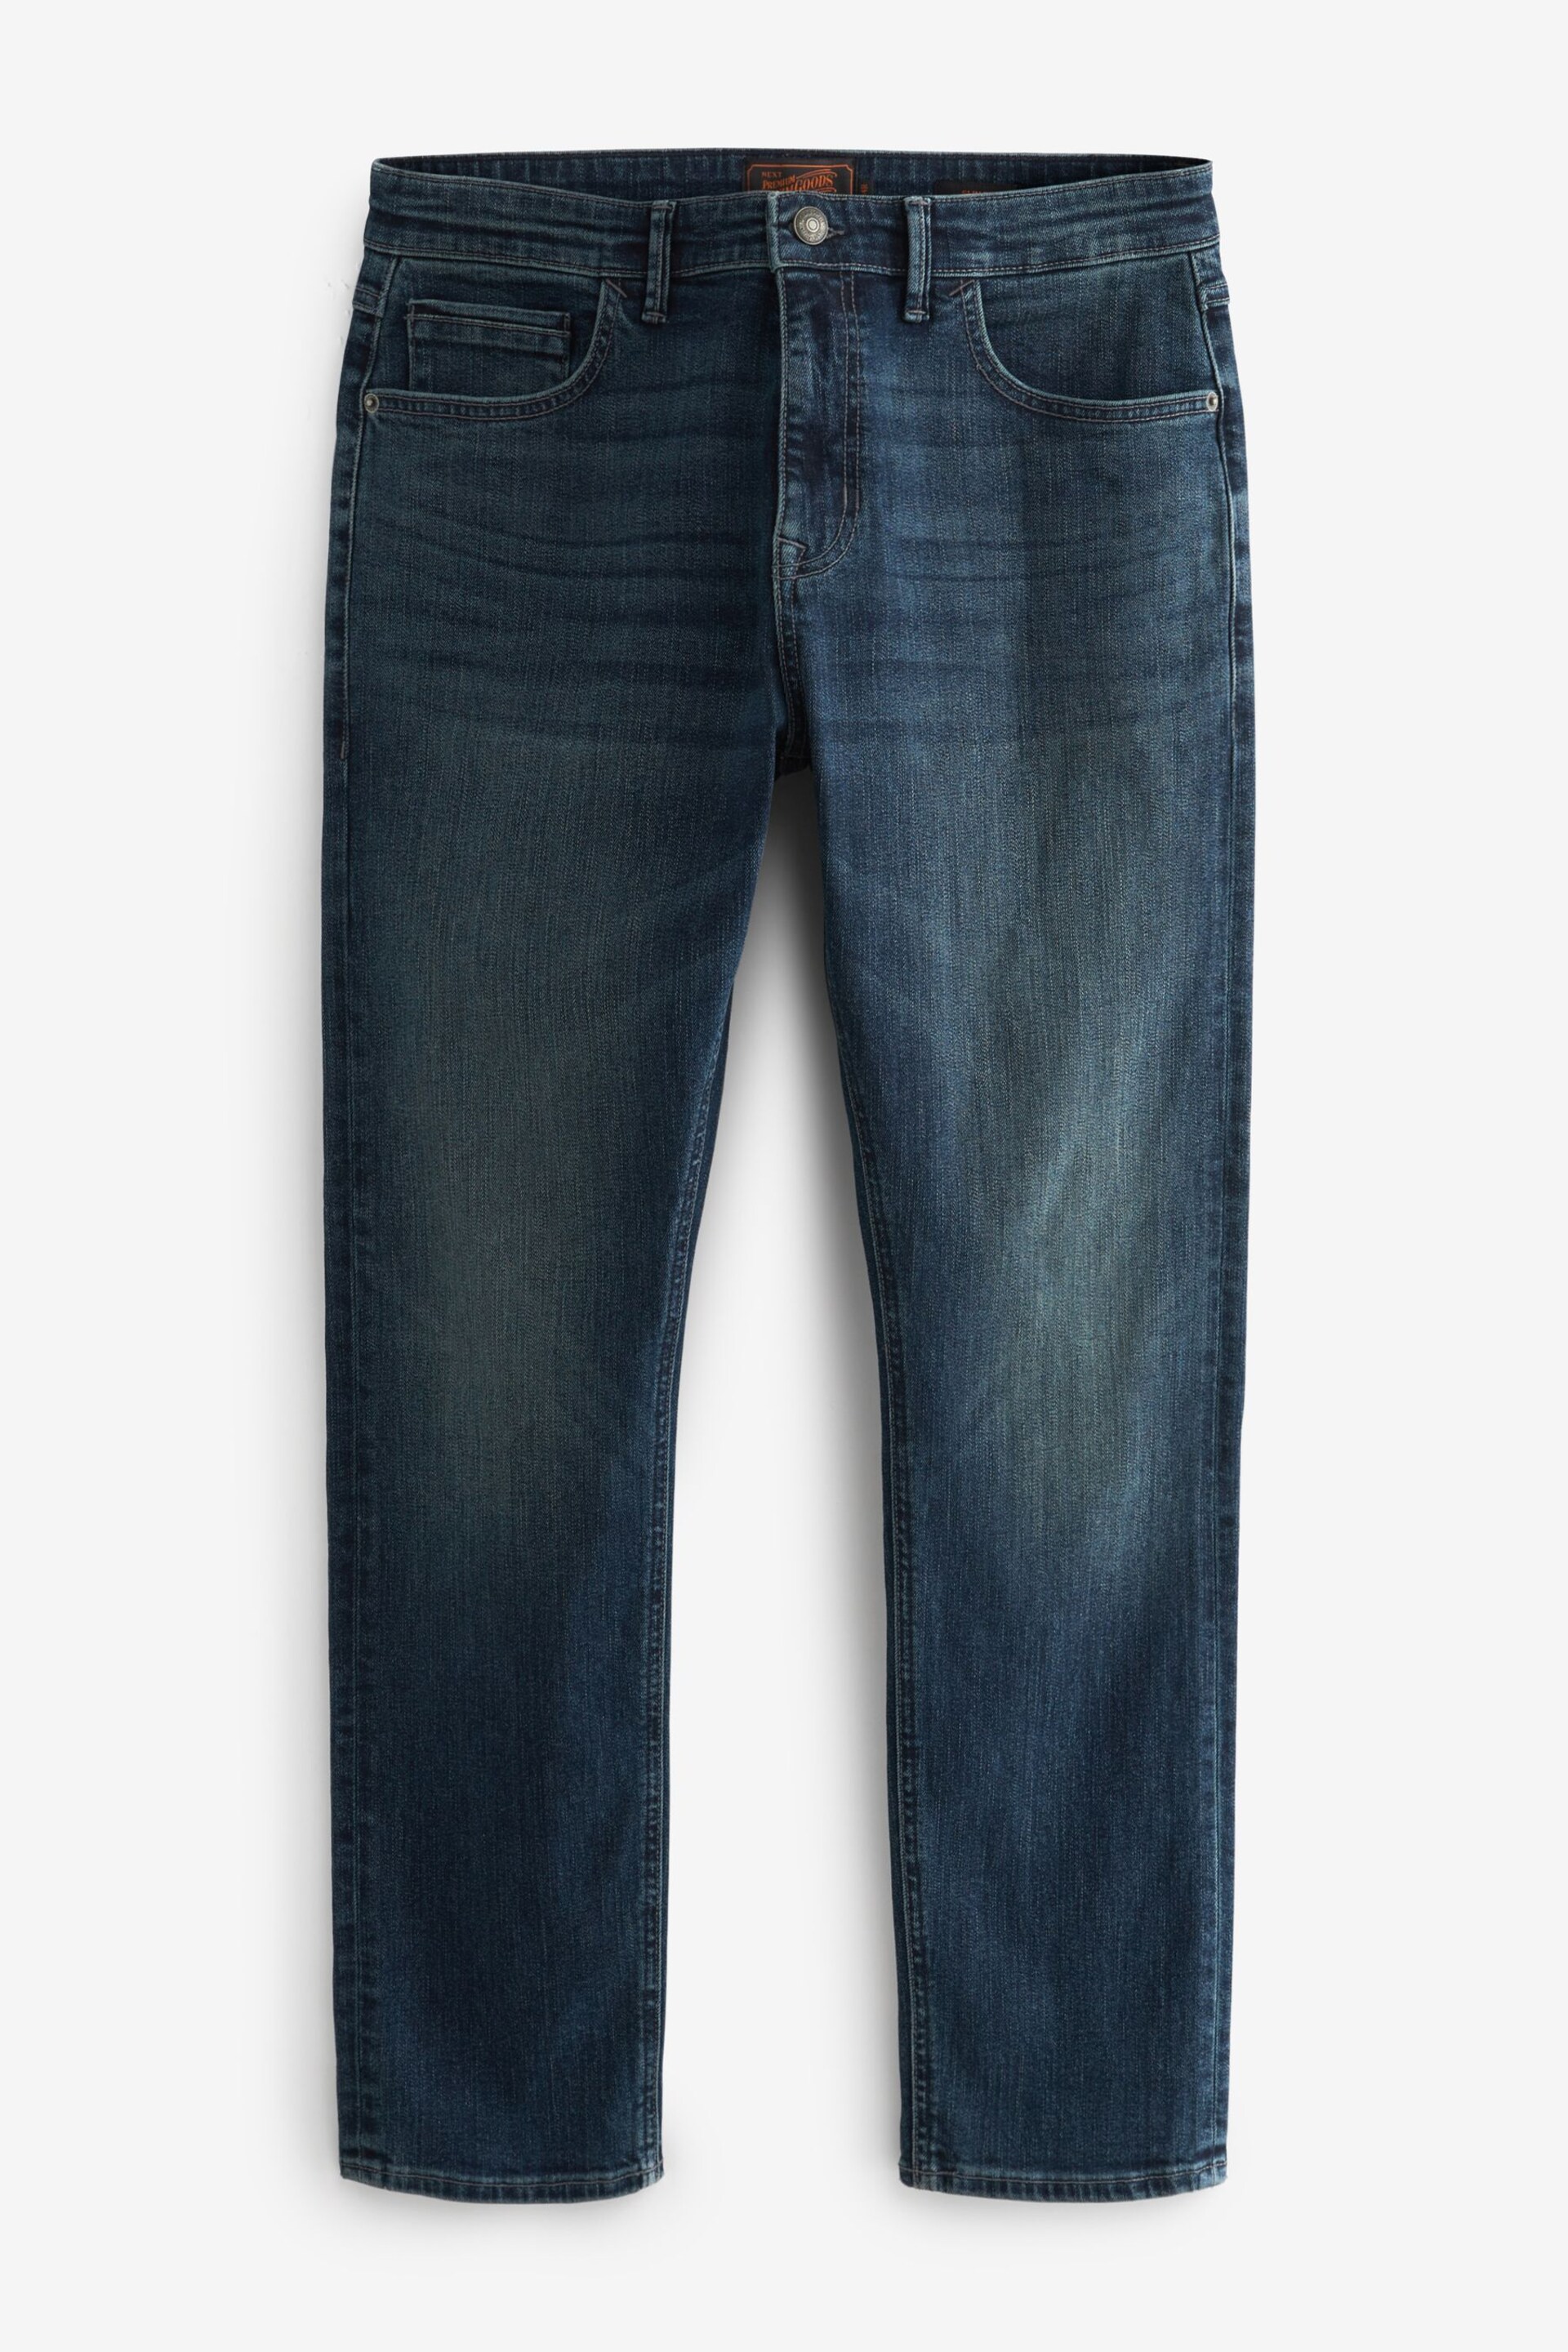 Blue Vintage Tint Slim Fit Premium Heavyweight Signature Cotton Jeans - Image 7 of 10